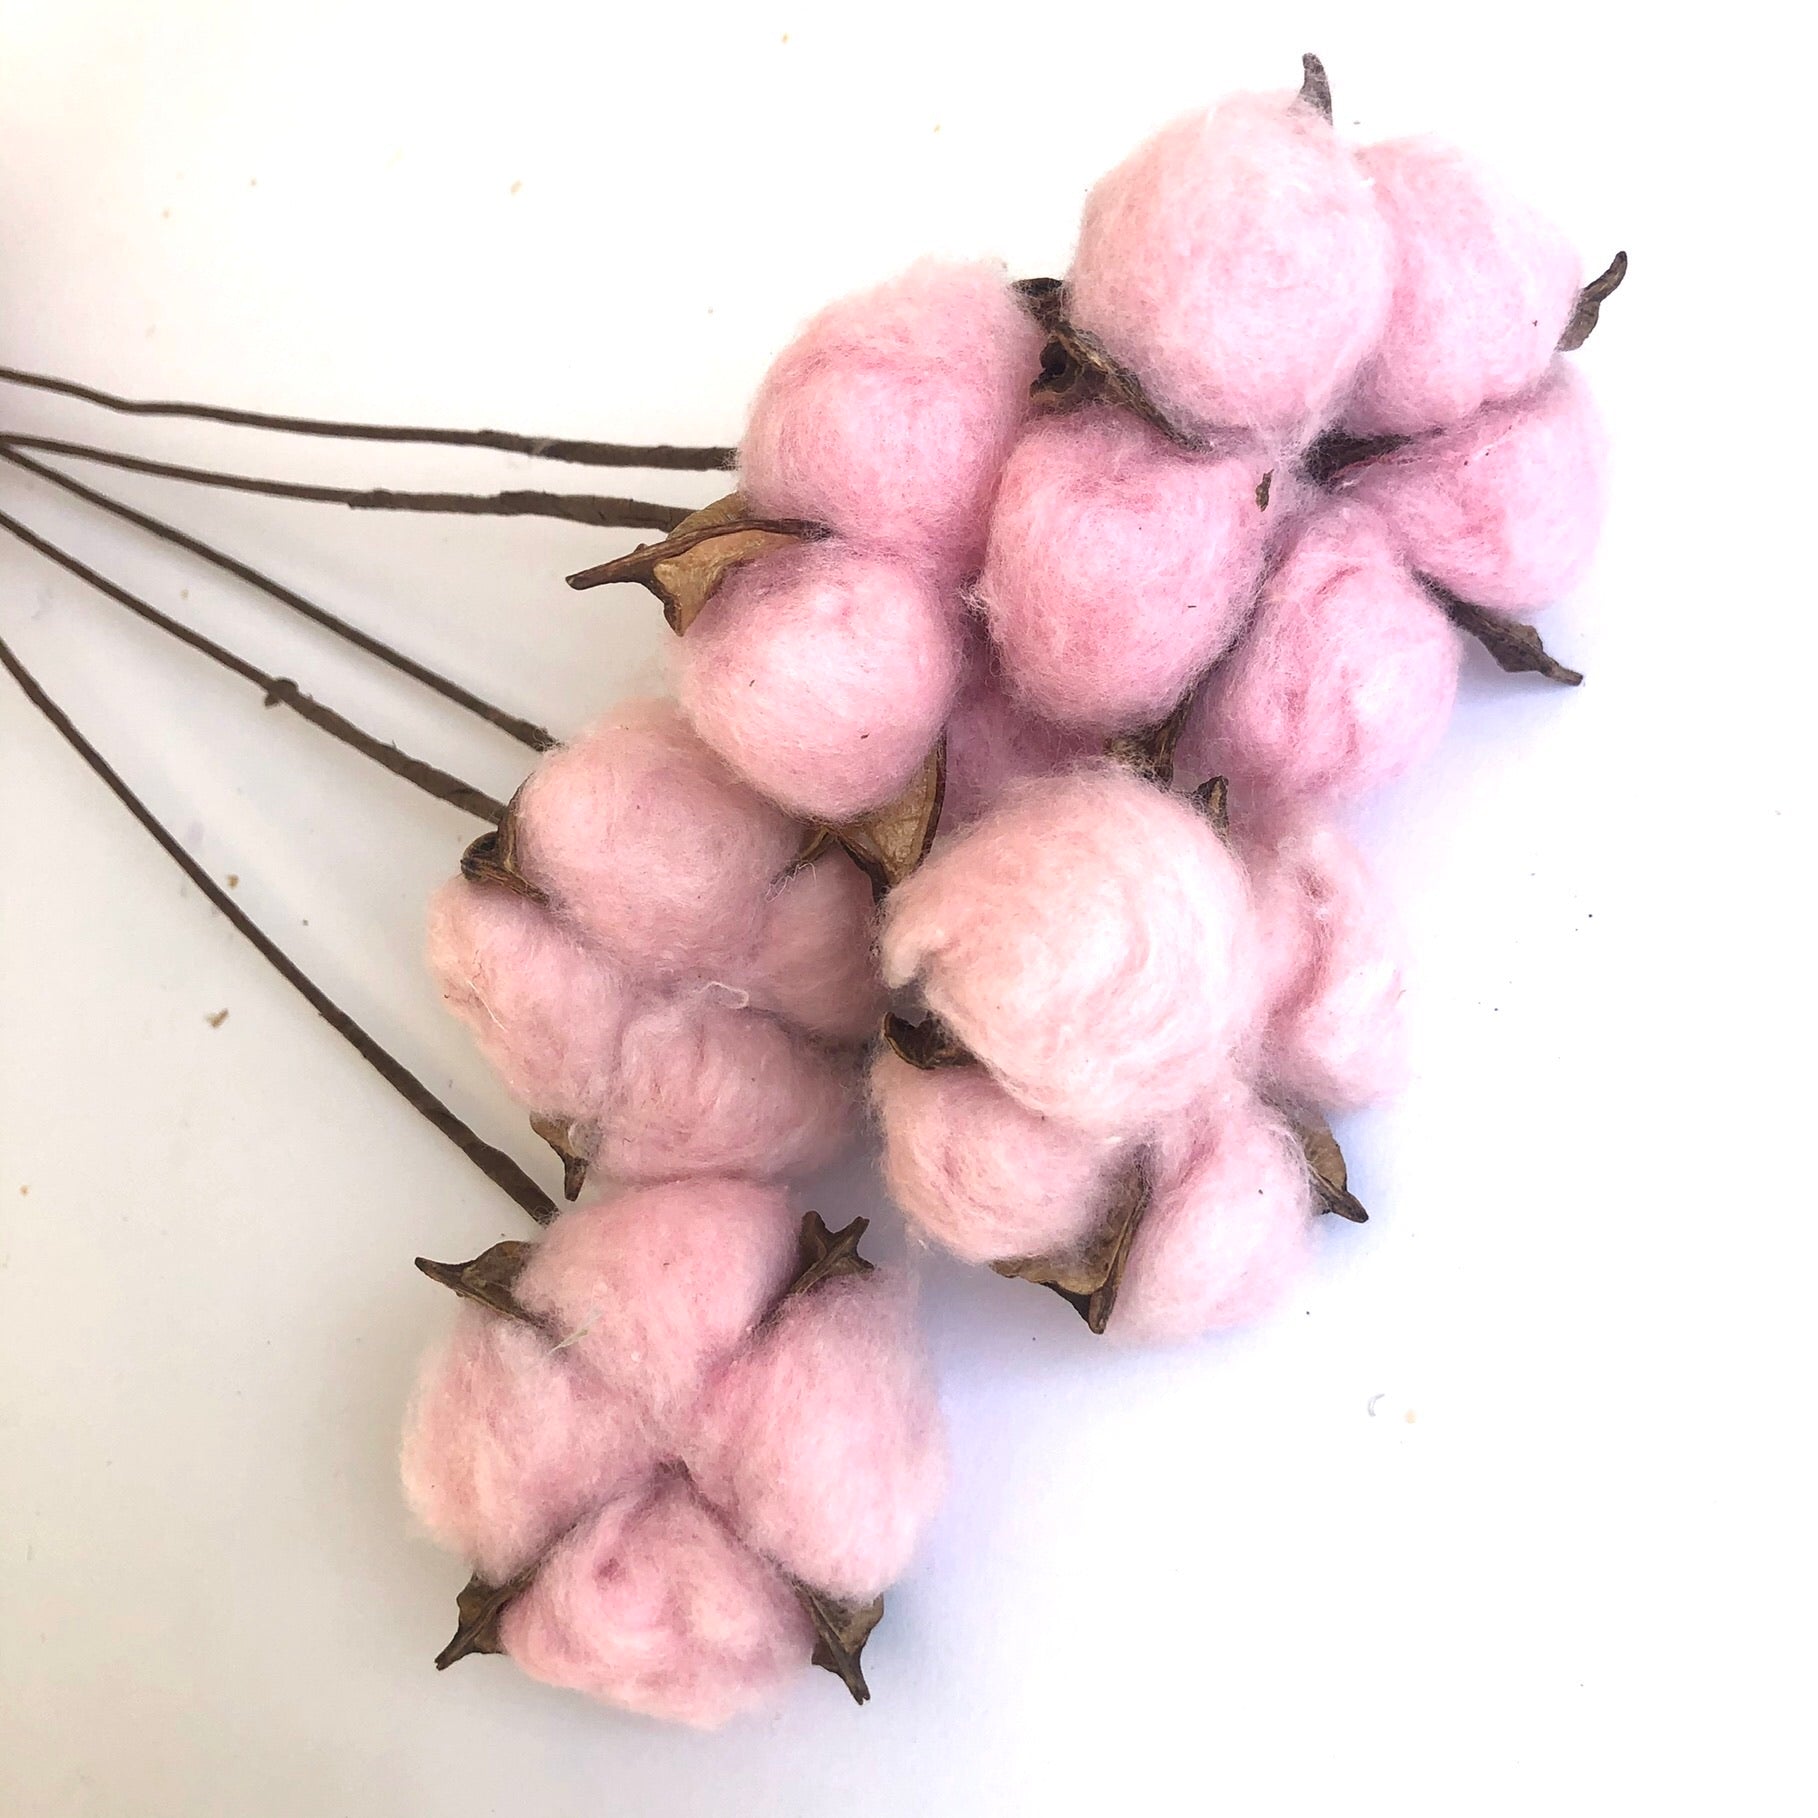 Artificial Natural Dried Cotton Flower Stem - Pink 60cm Long